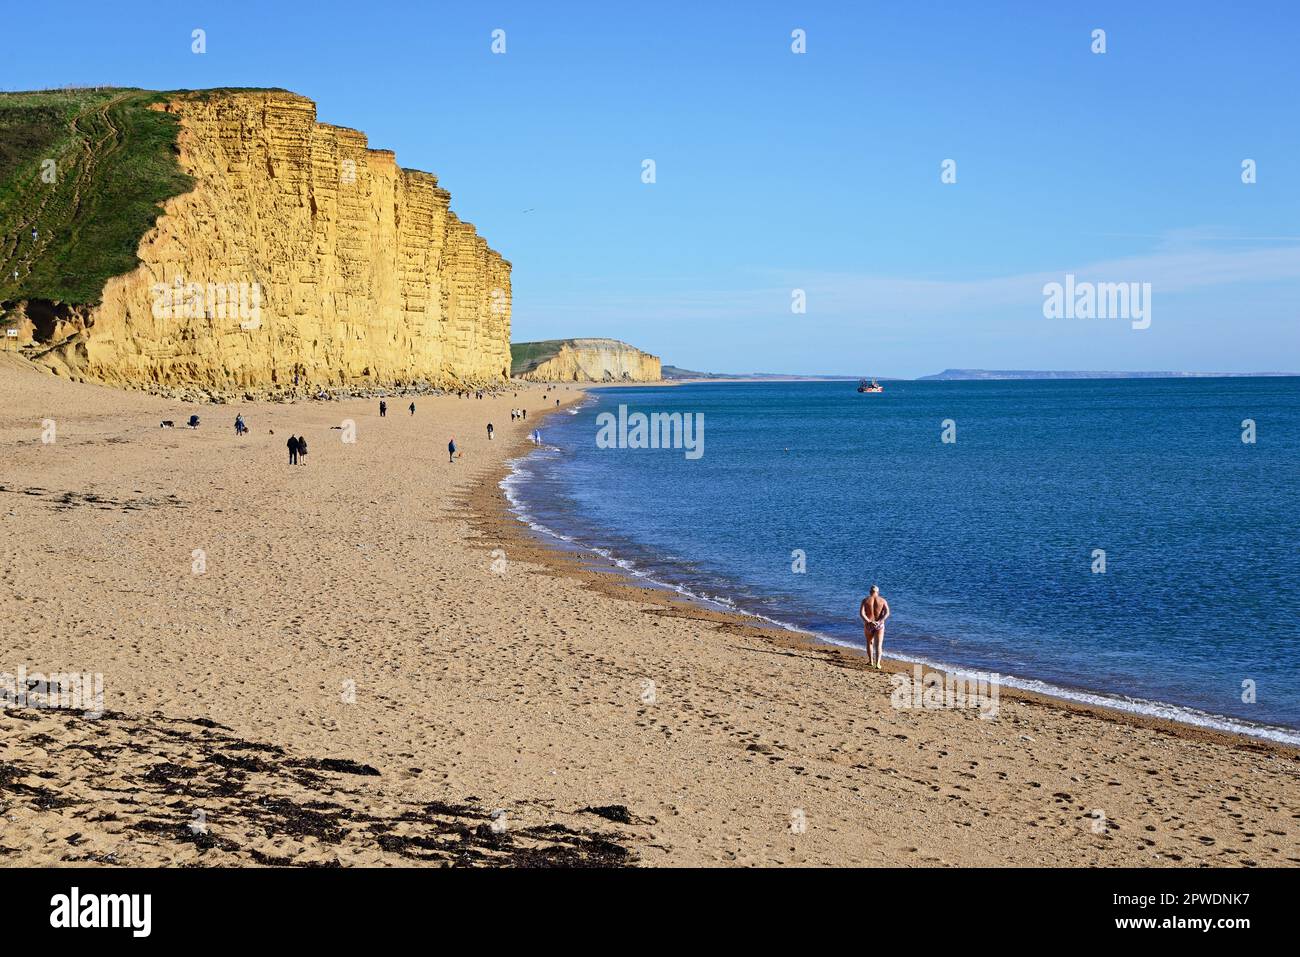 View along the beach and Jurassic Coast coastline, West Bay, Dorset, UK, Europe. Stock Photo